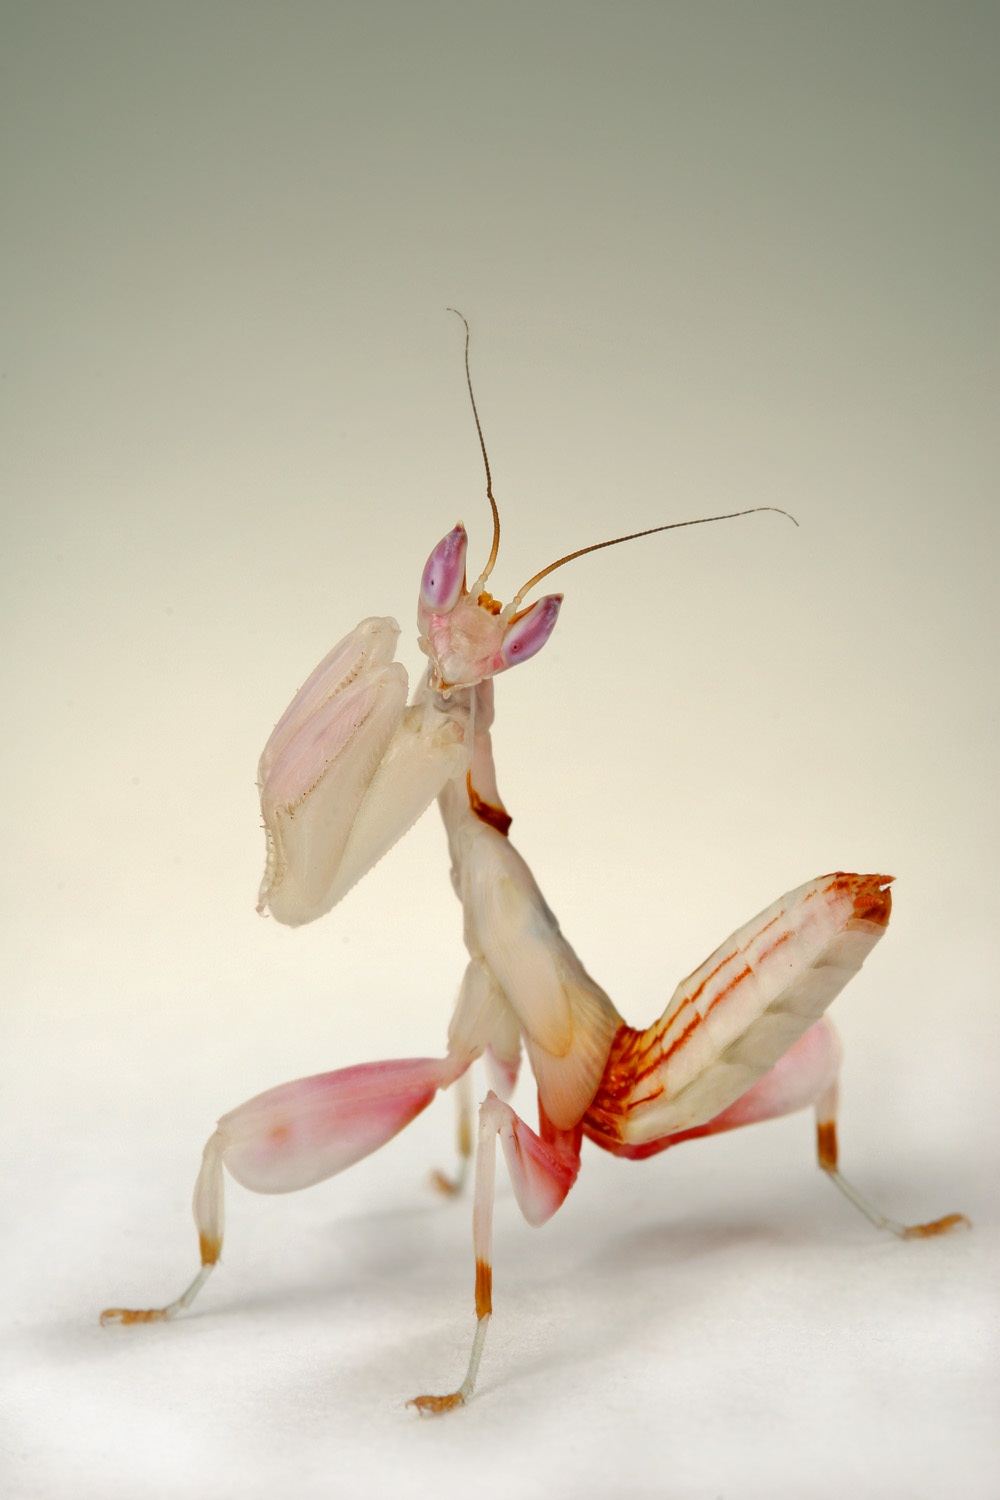 Orwed mantis